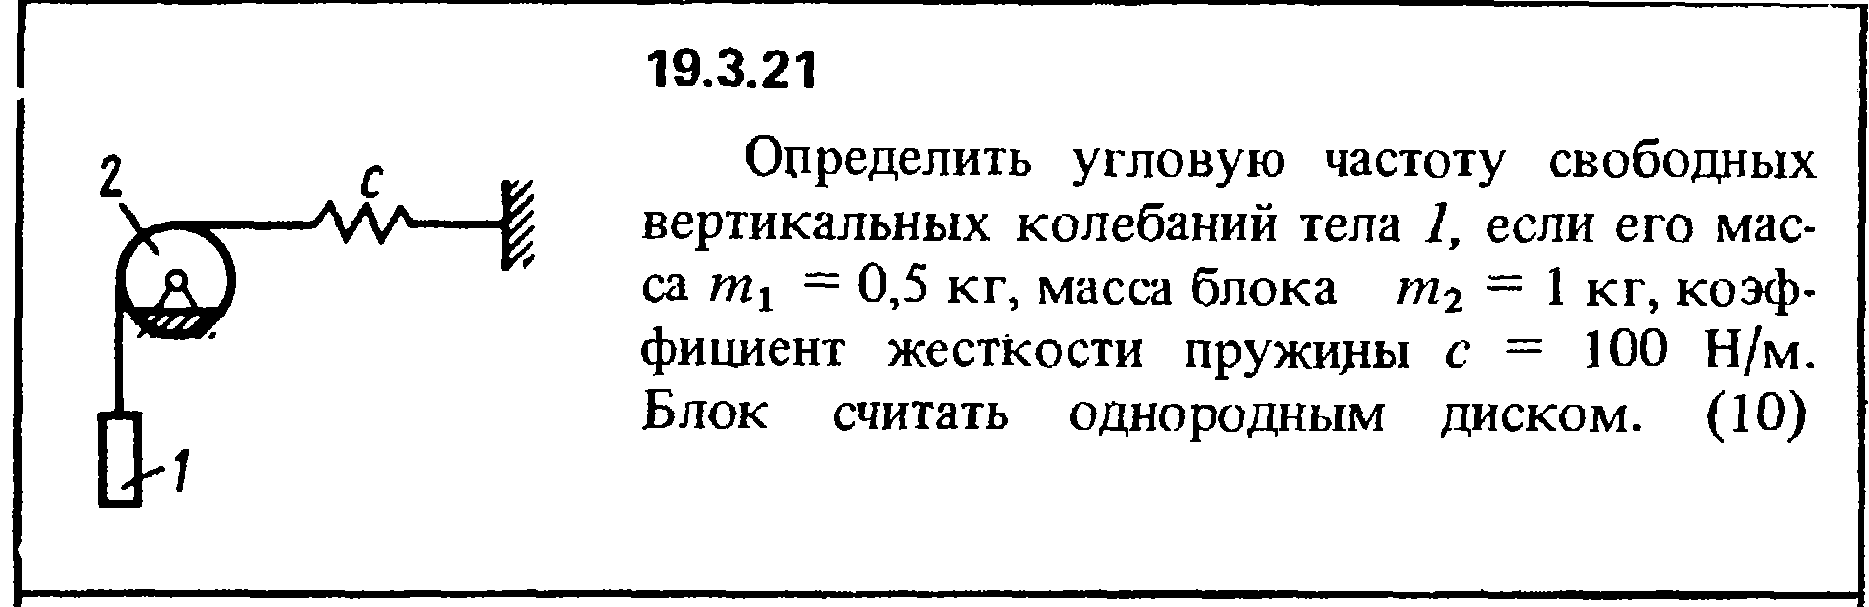 Решение 19.3.21 из сборника (решебника) Кепе О.Е. 1989